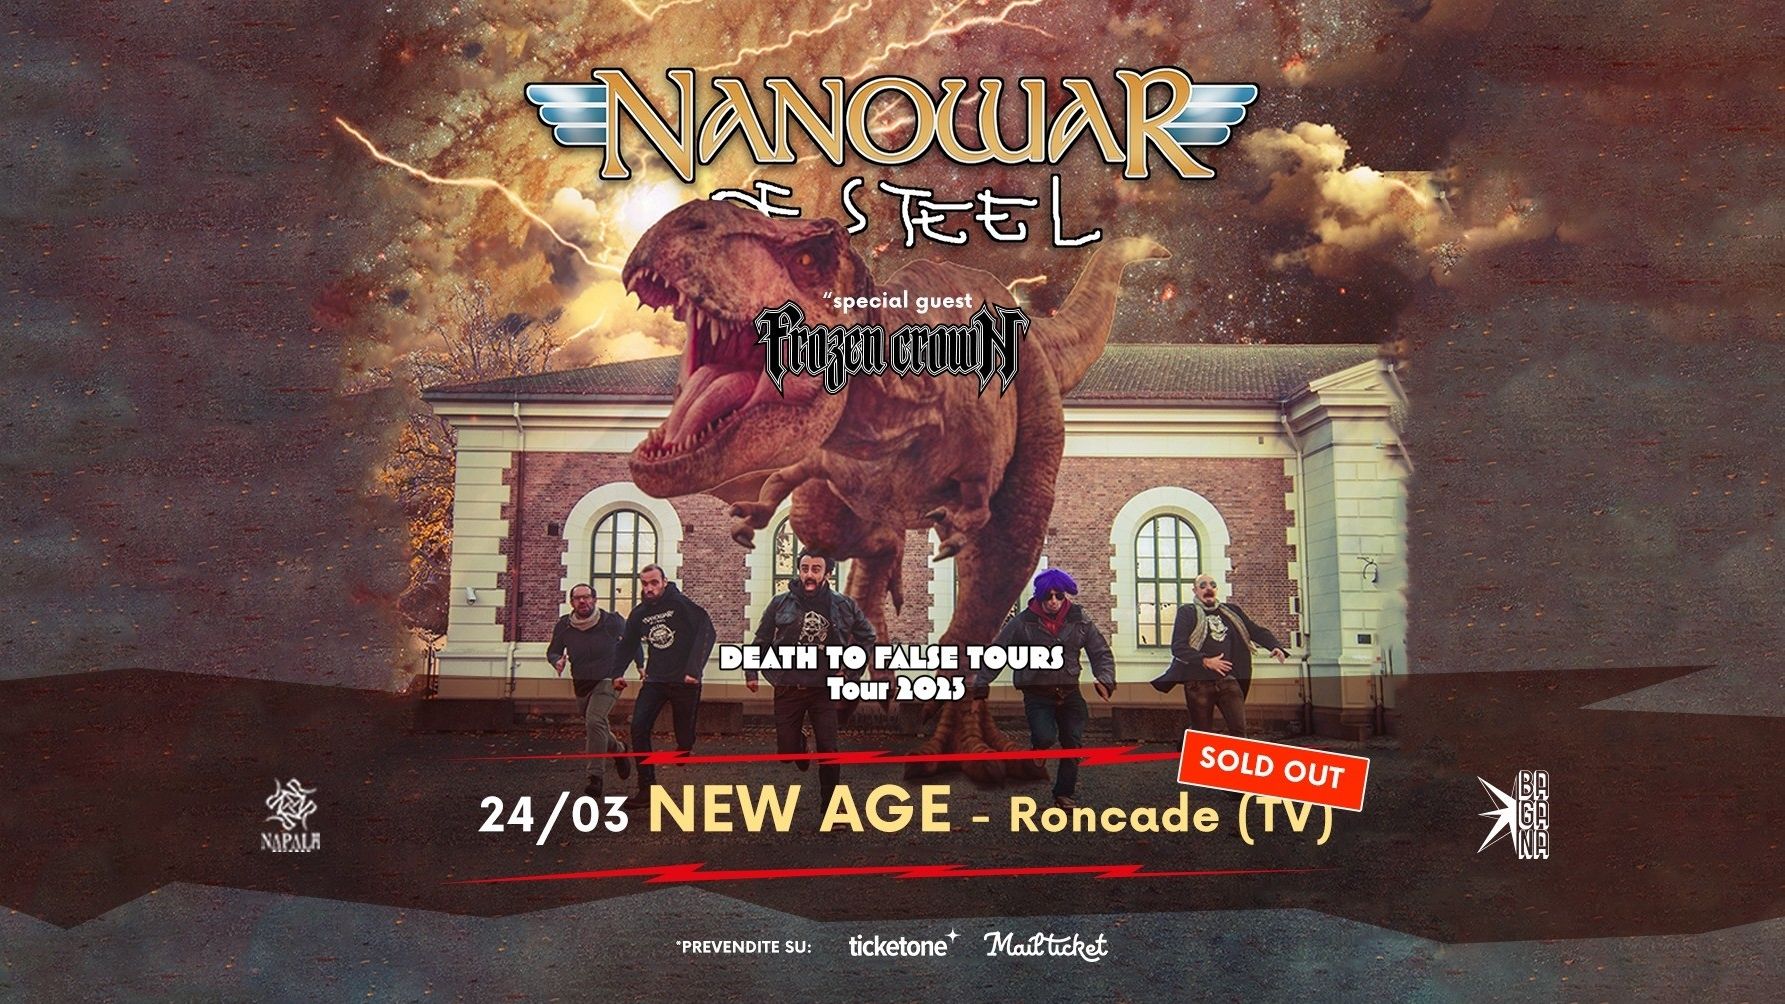 Nanowar Of Steel “Death To False Tours”